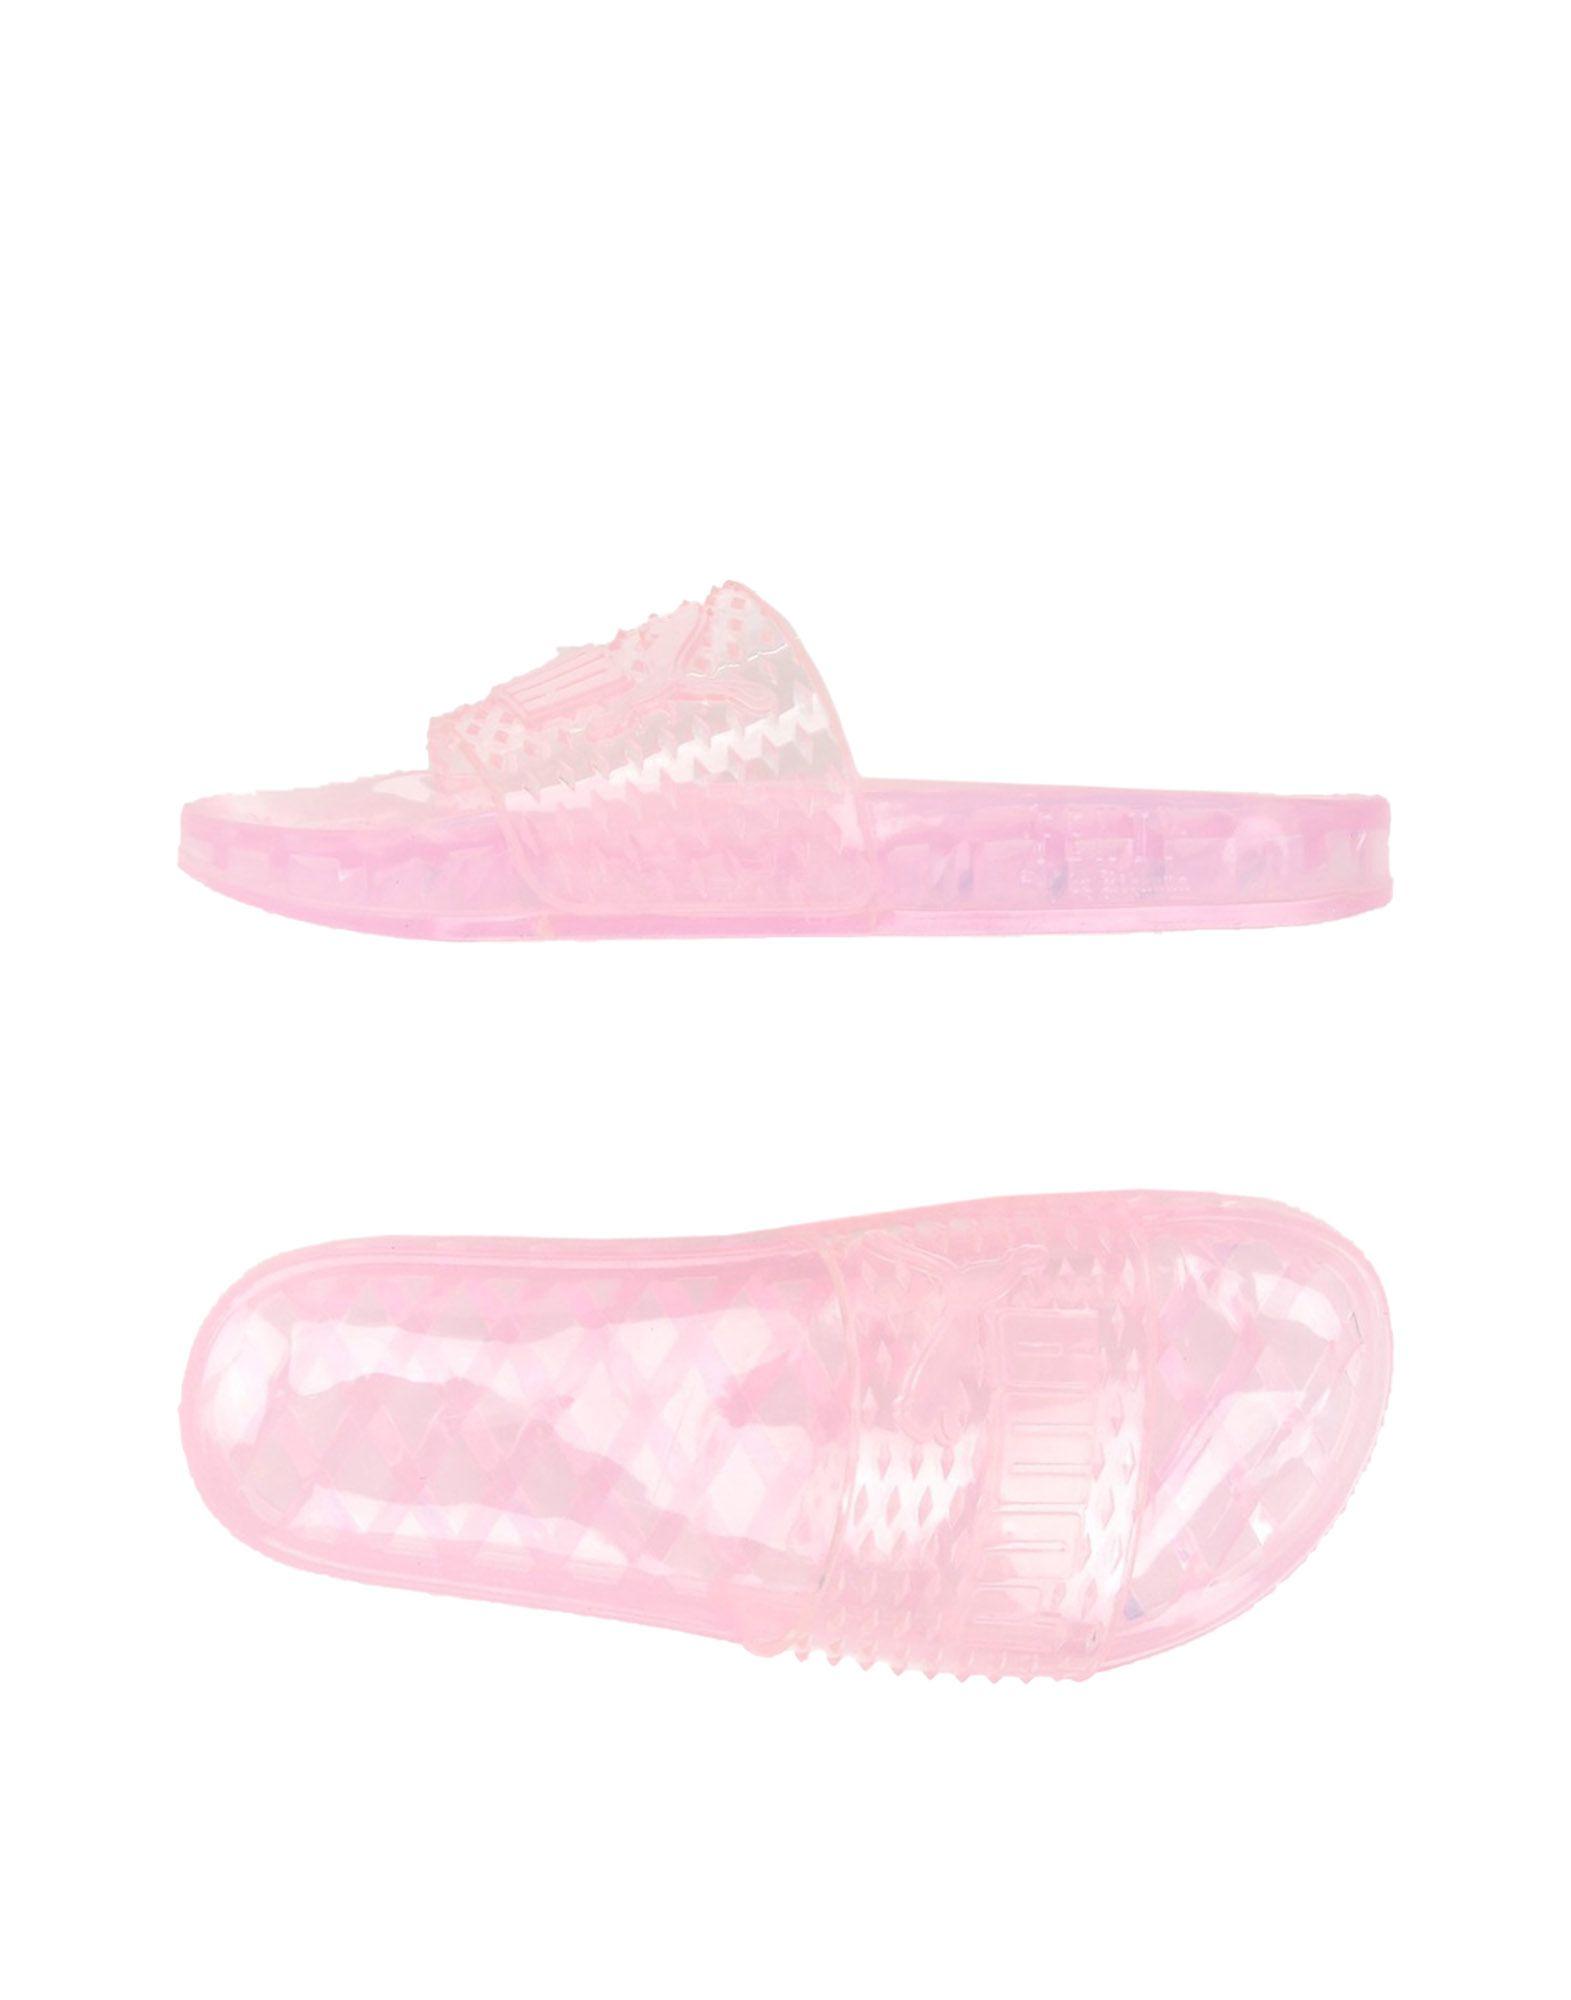 puma fenty jelly slides pink